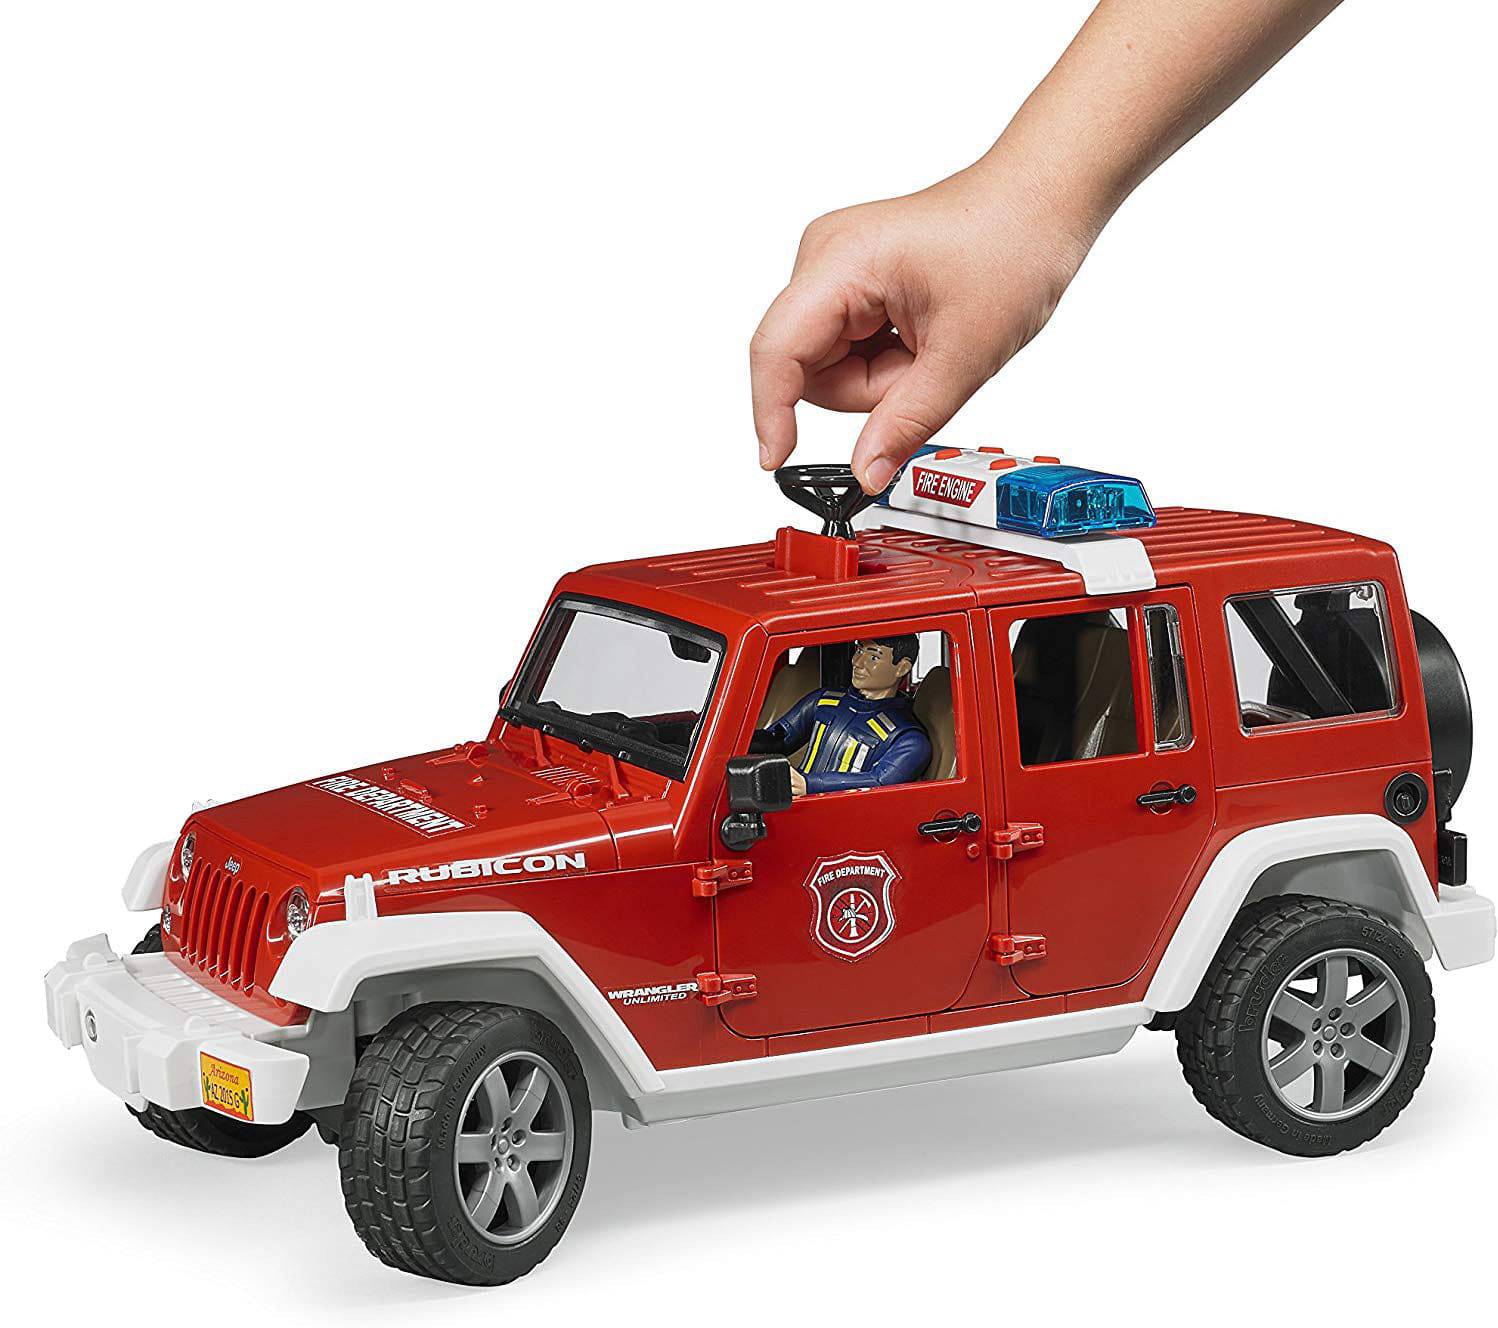 Jeep Rubicon Fire Vehicle - A Child's Delight